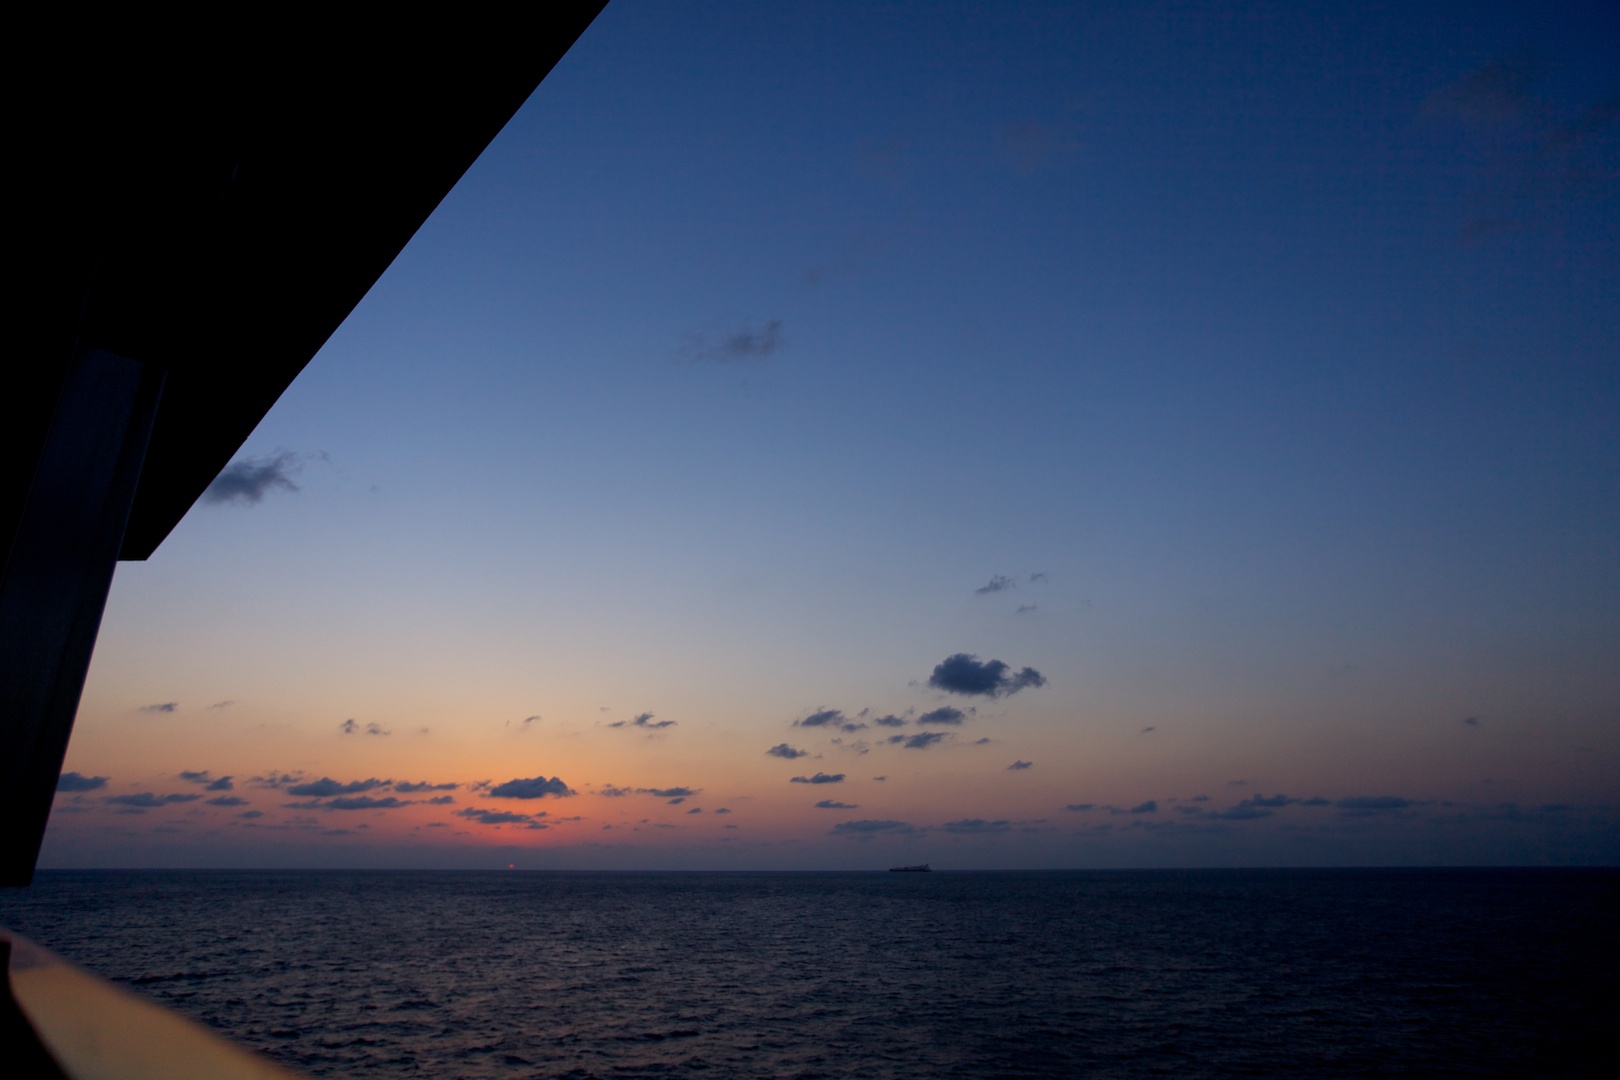 Sunset at sea aboard the Carnival Triumph